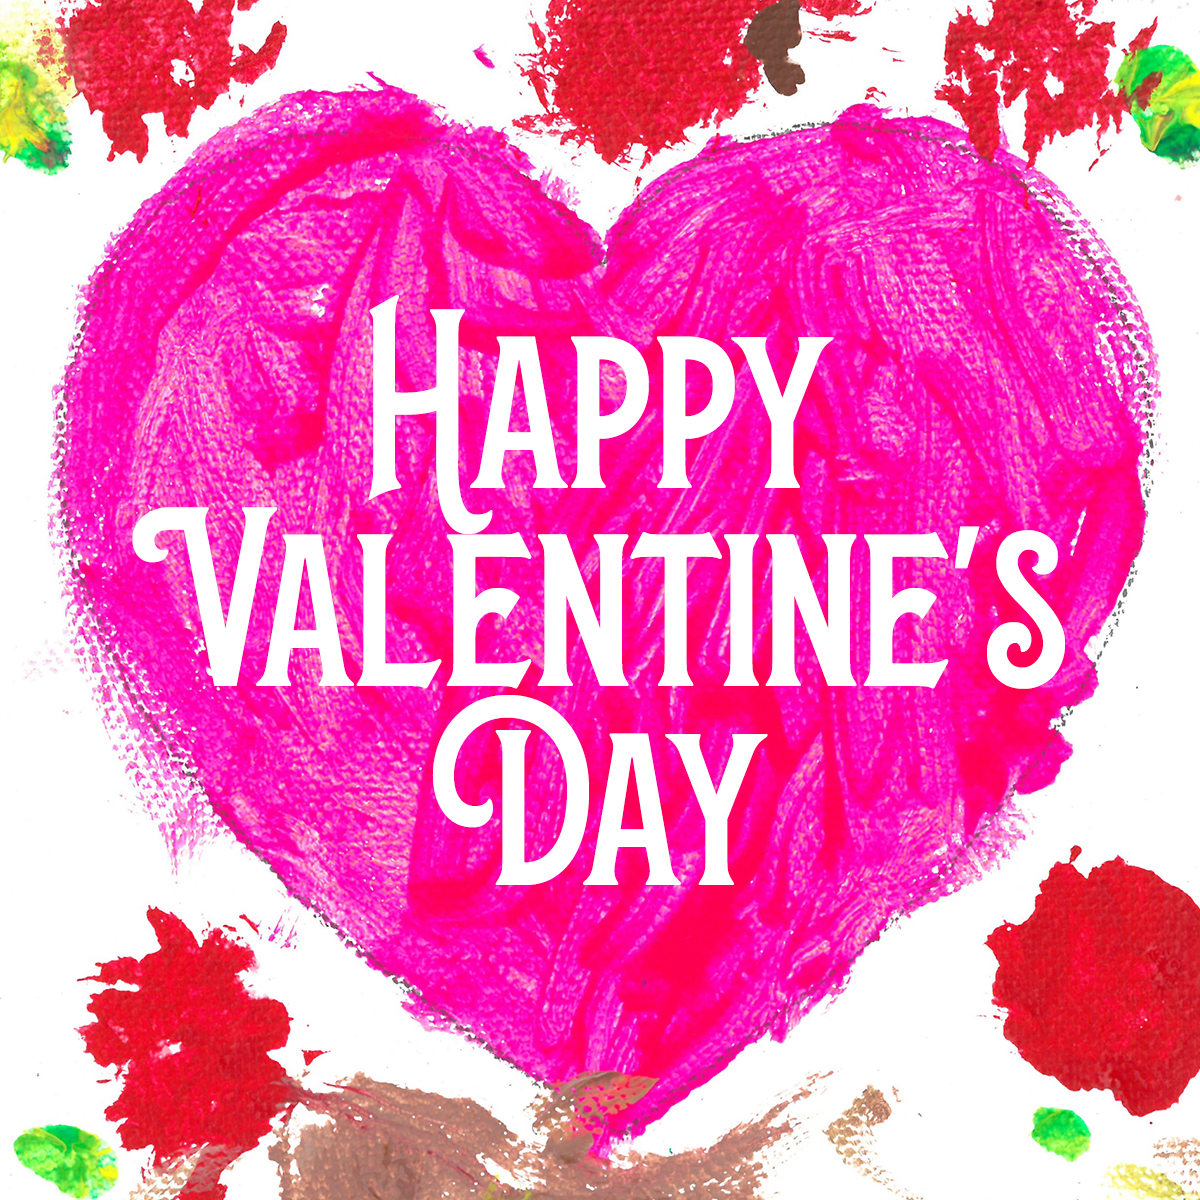 Send a virtual Valentine's card to patients St. Jude Children’s